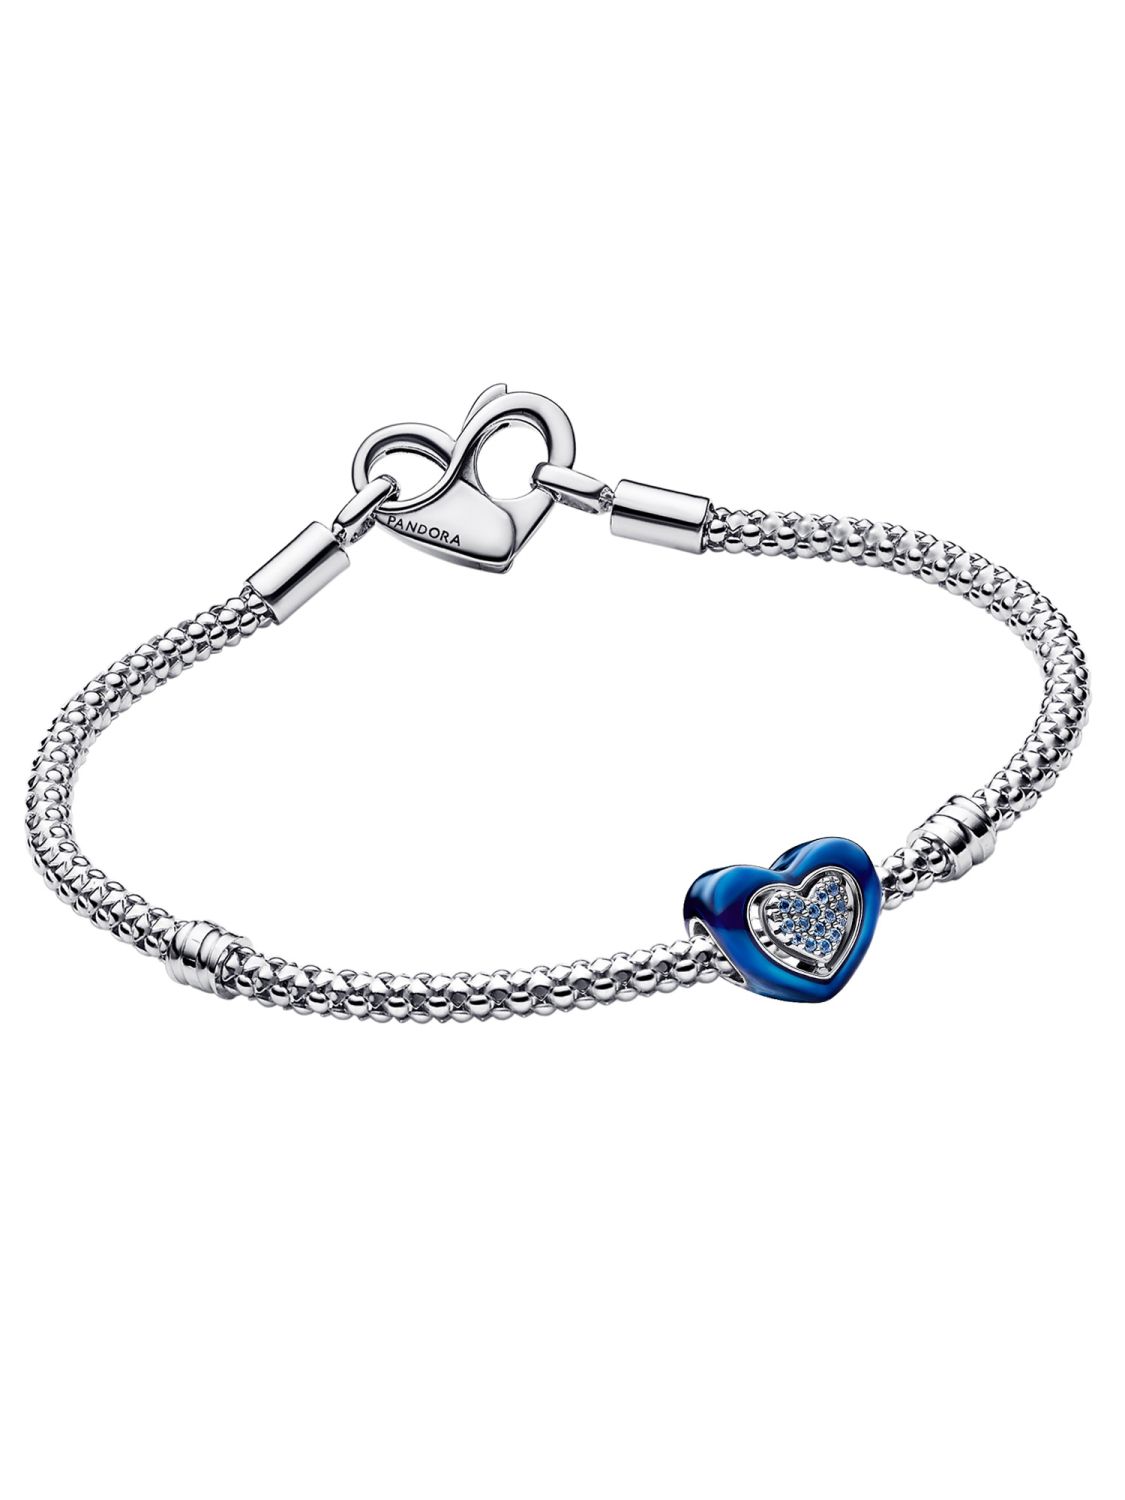 Pandora Blue Pansy Flower Pendant Necklace | Flower pendant necklace,  Flower pendant, Pendant necklace